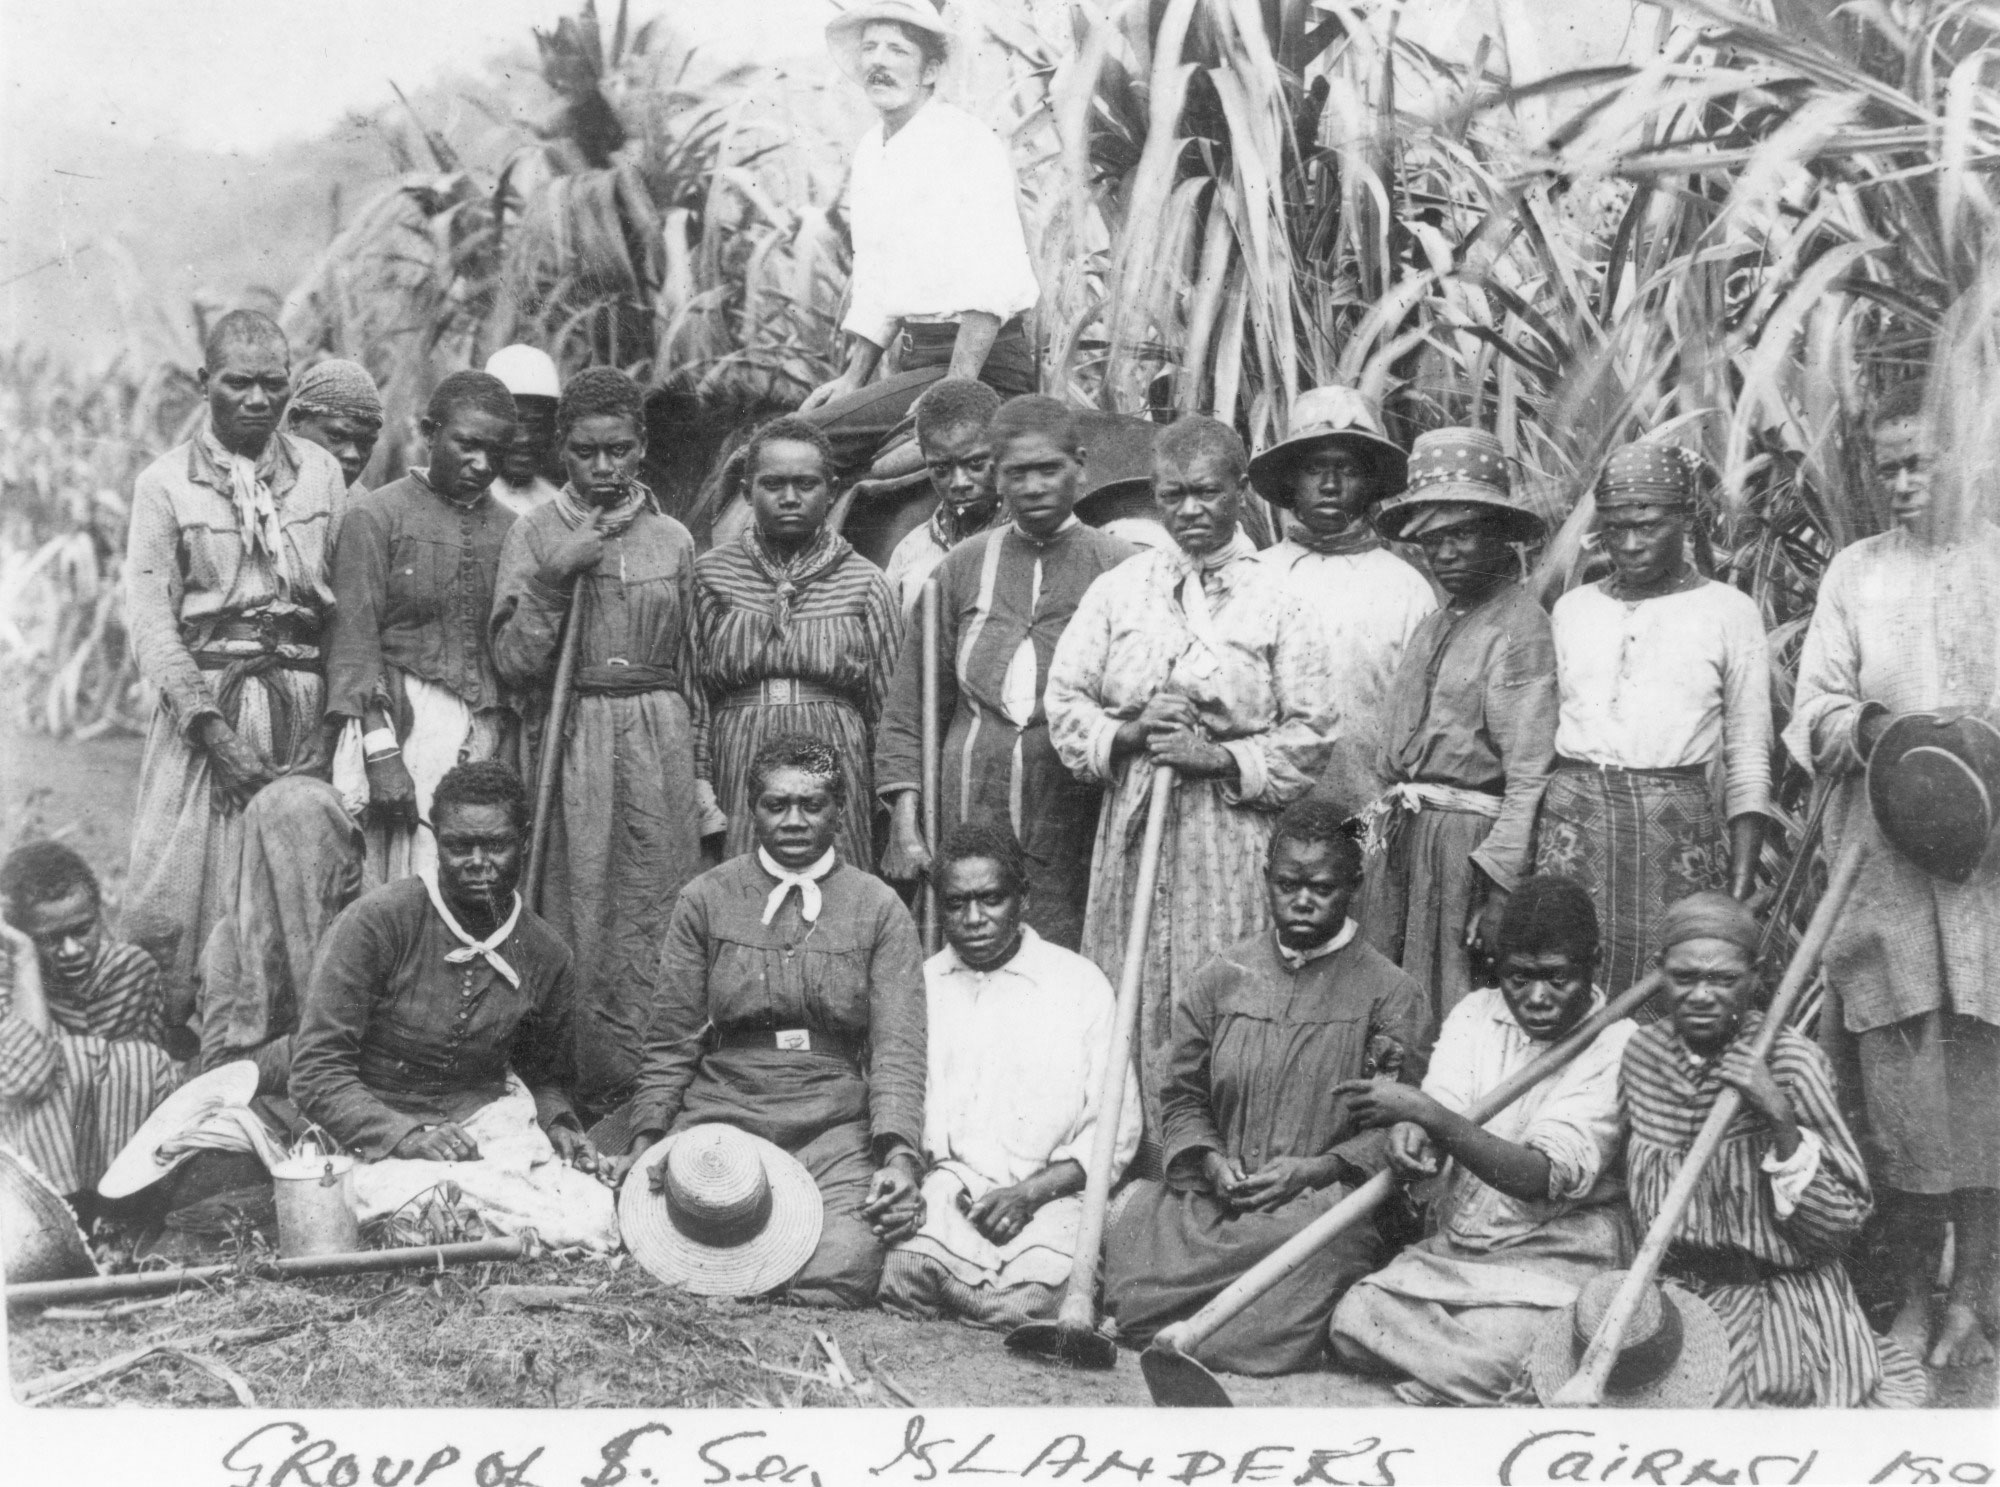 Group of Australian South Sea Islander women labourers on a sugar cane plantation near Cairns, Queensland, about 1895.